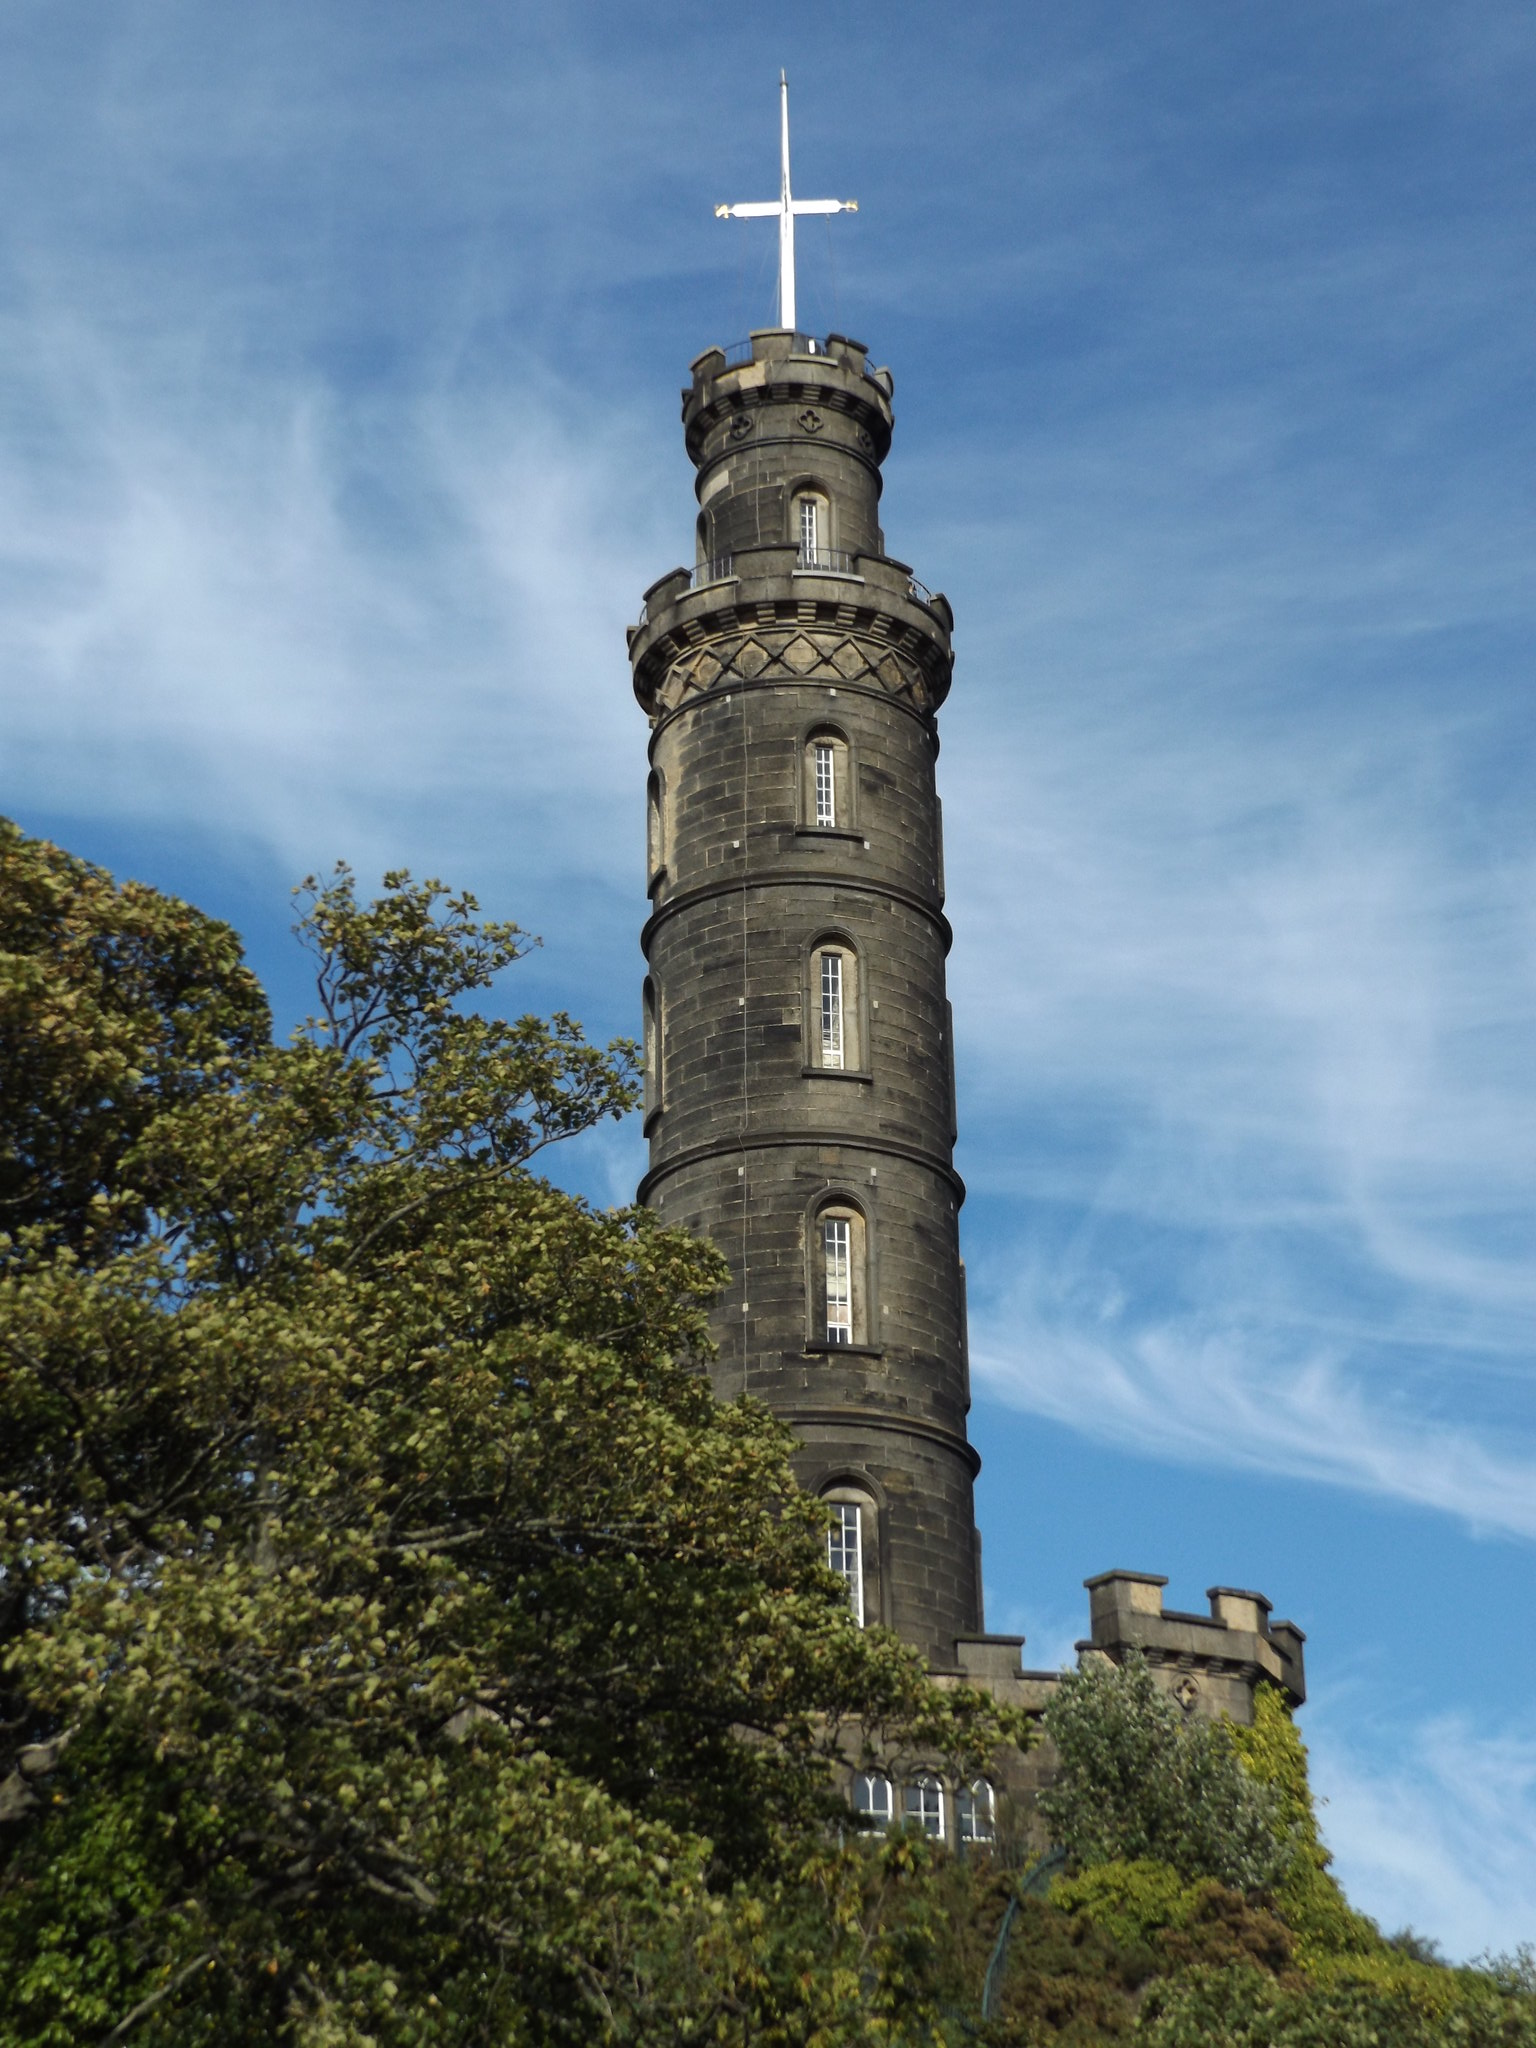 Nelson Monument, Calton Hill, Edinburgh, 11 July 2018